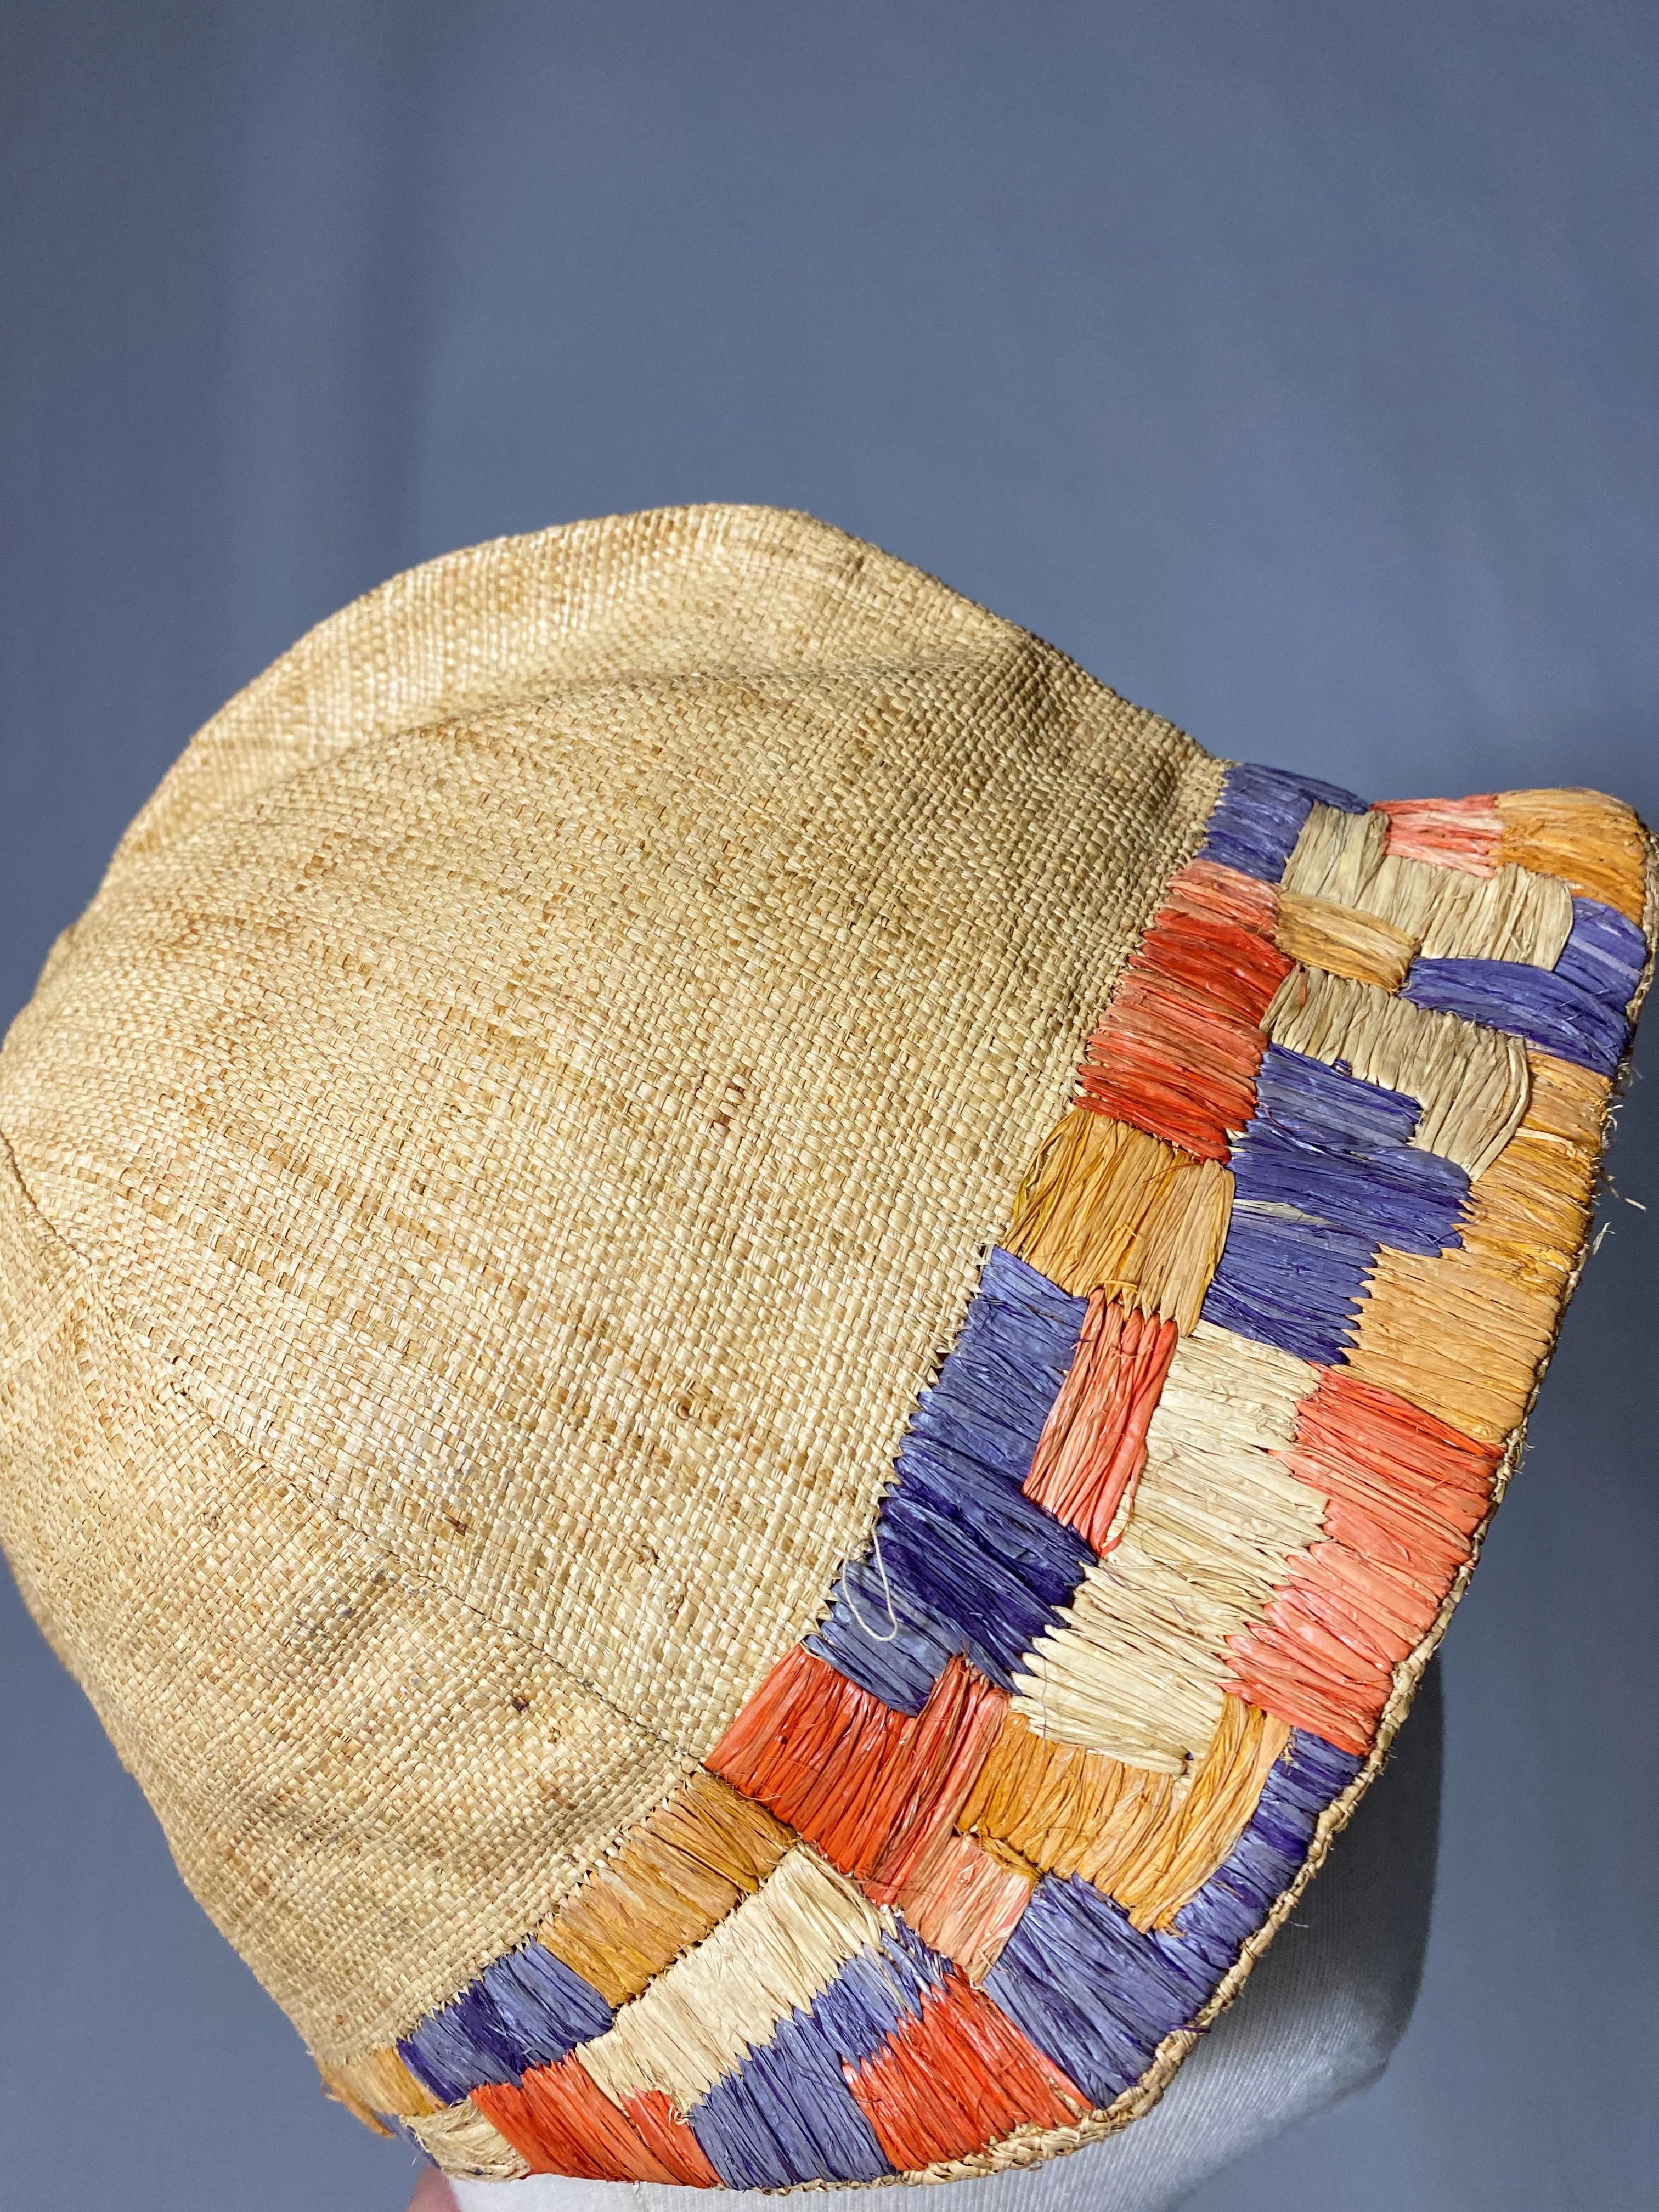 Women's or Men's Summer cloche hat in straw and braided raffia - Bauhaus Germany Circa 1925